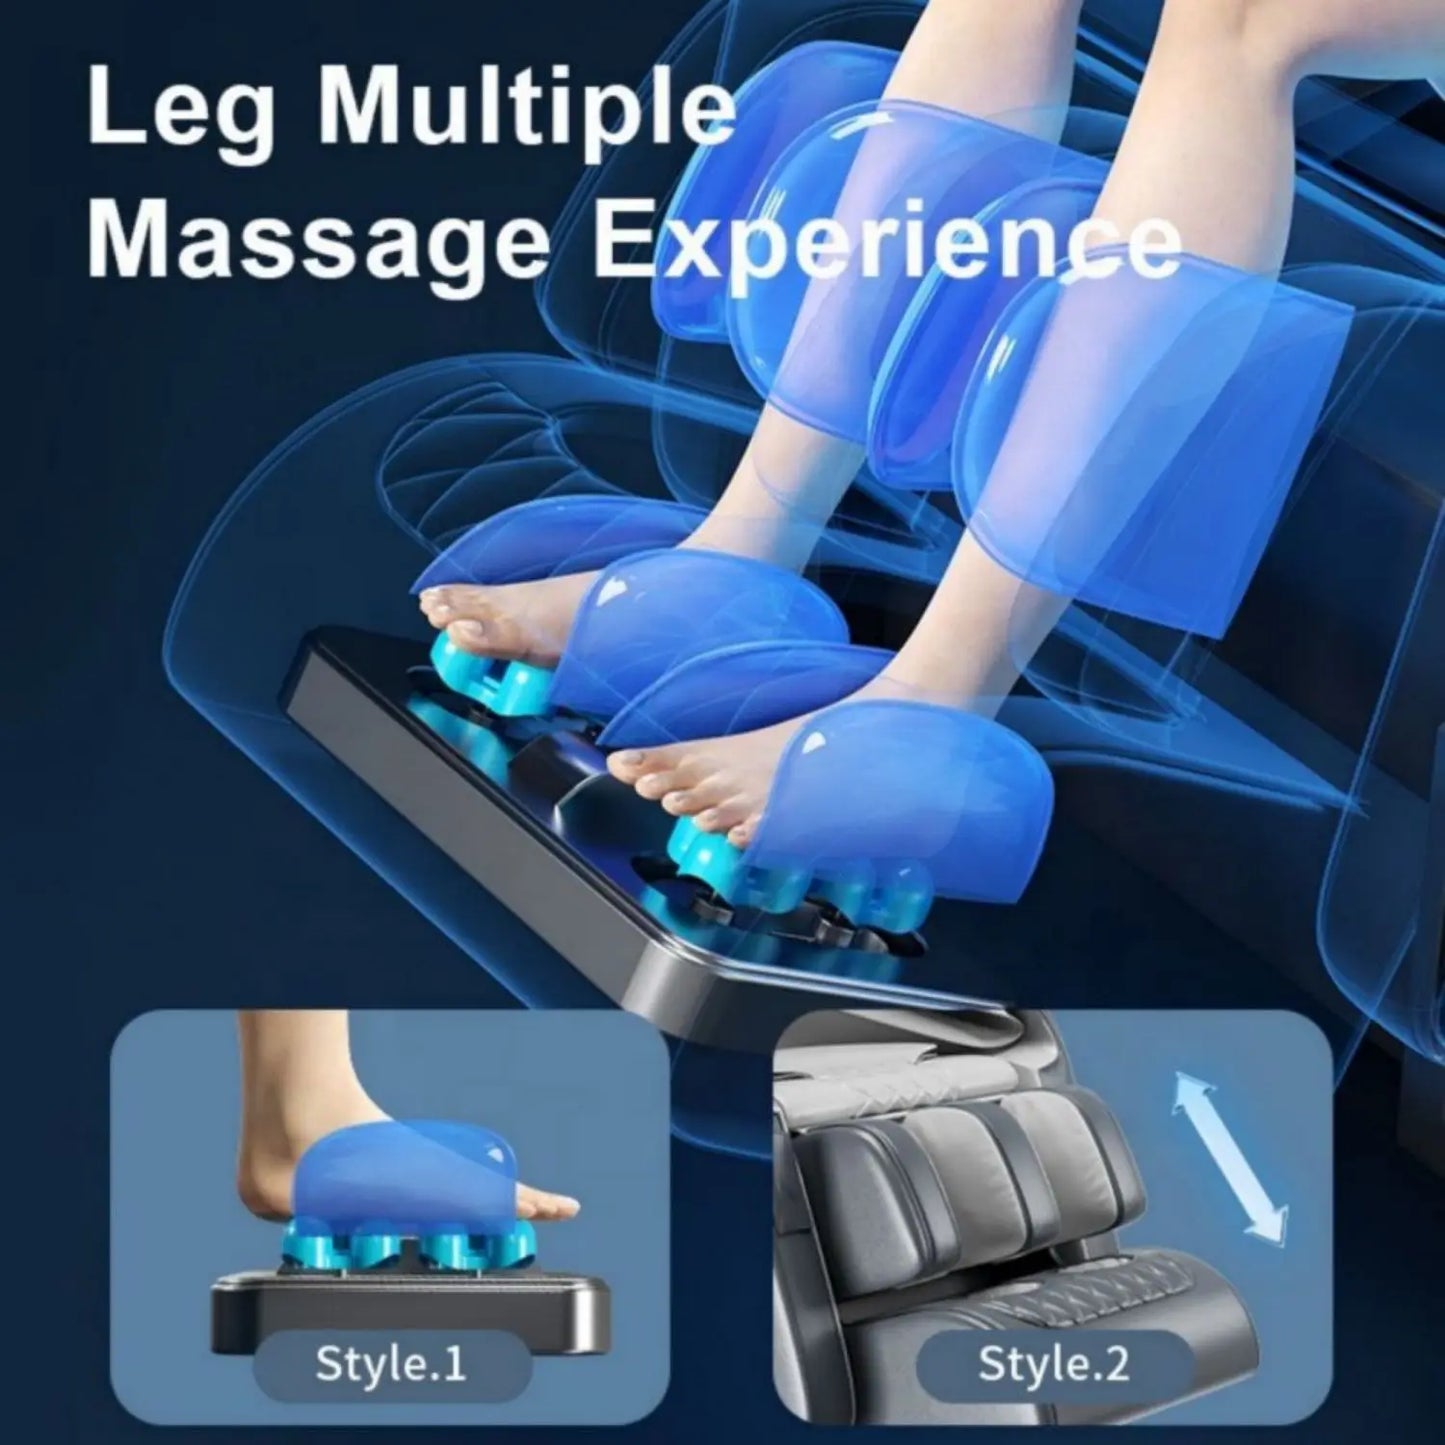 Newest Full Body 4D Electric Luxury Massage Chair Deluxe Zero-gravty AI Smart Health Care Shiatsu 4D Massage Chair Kneading Full